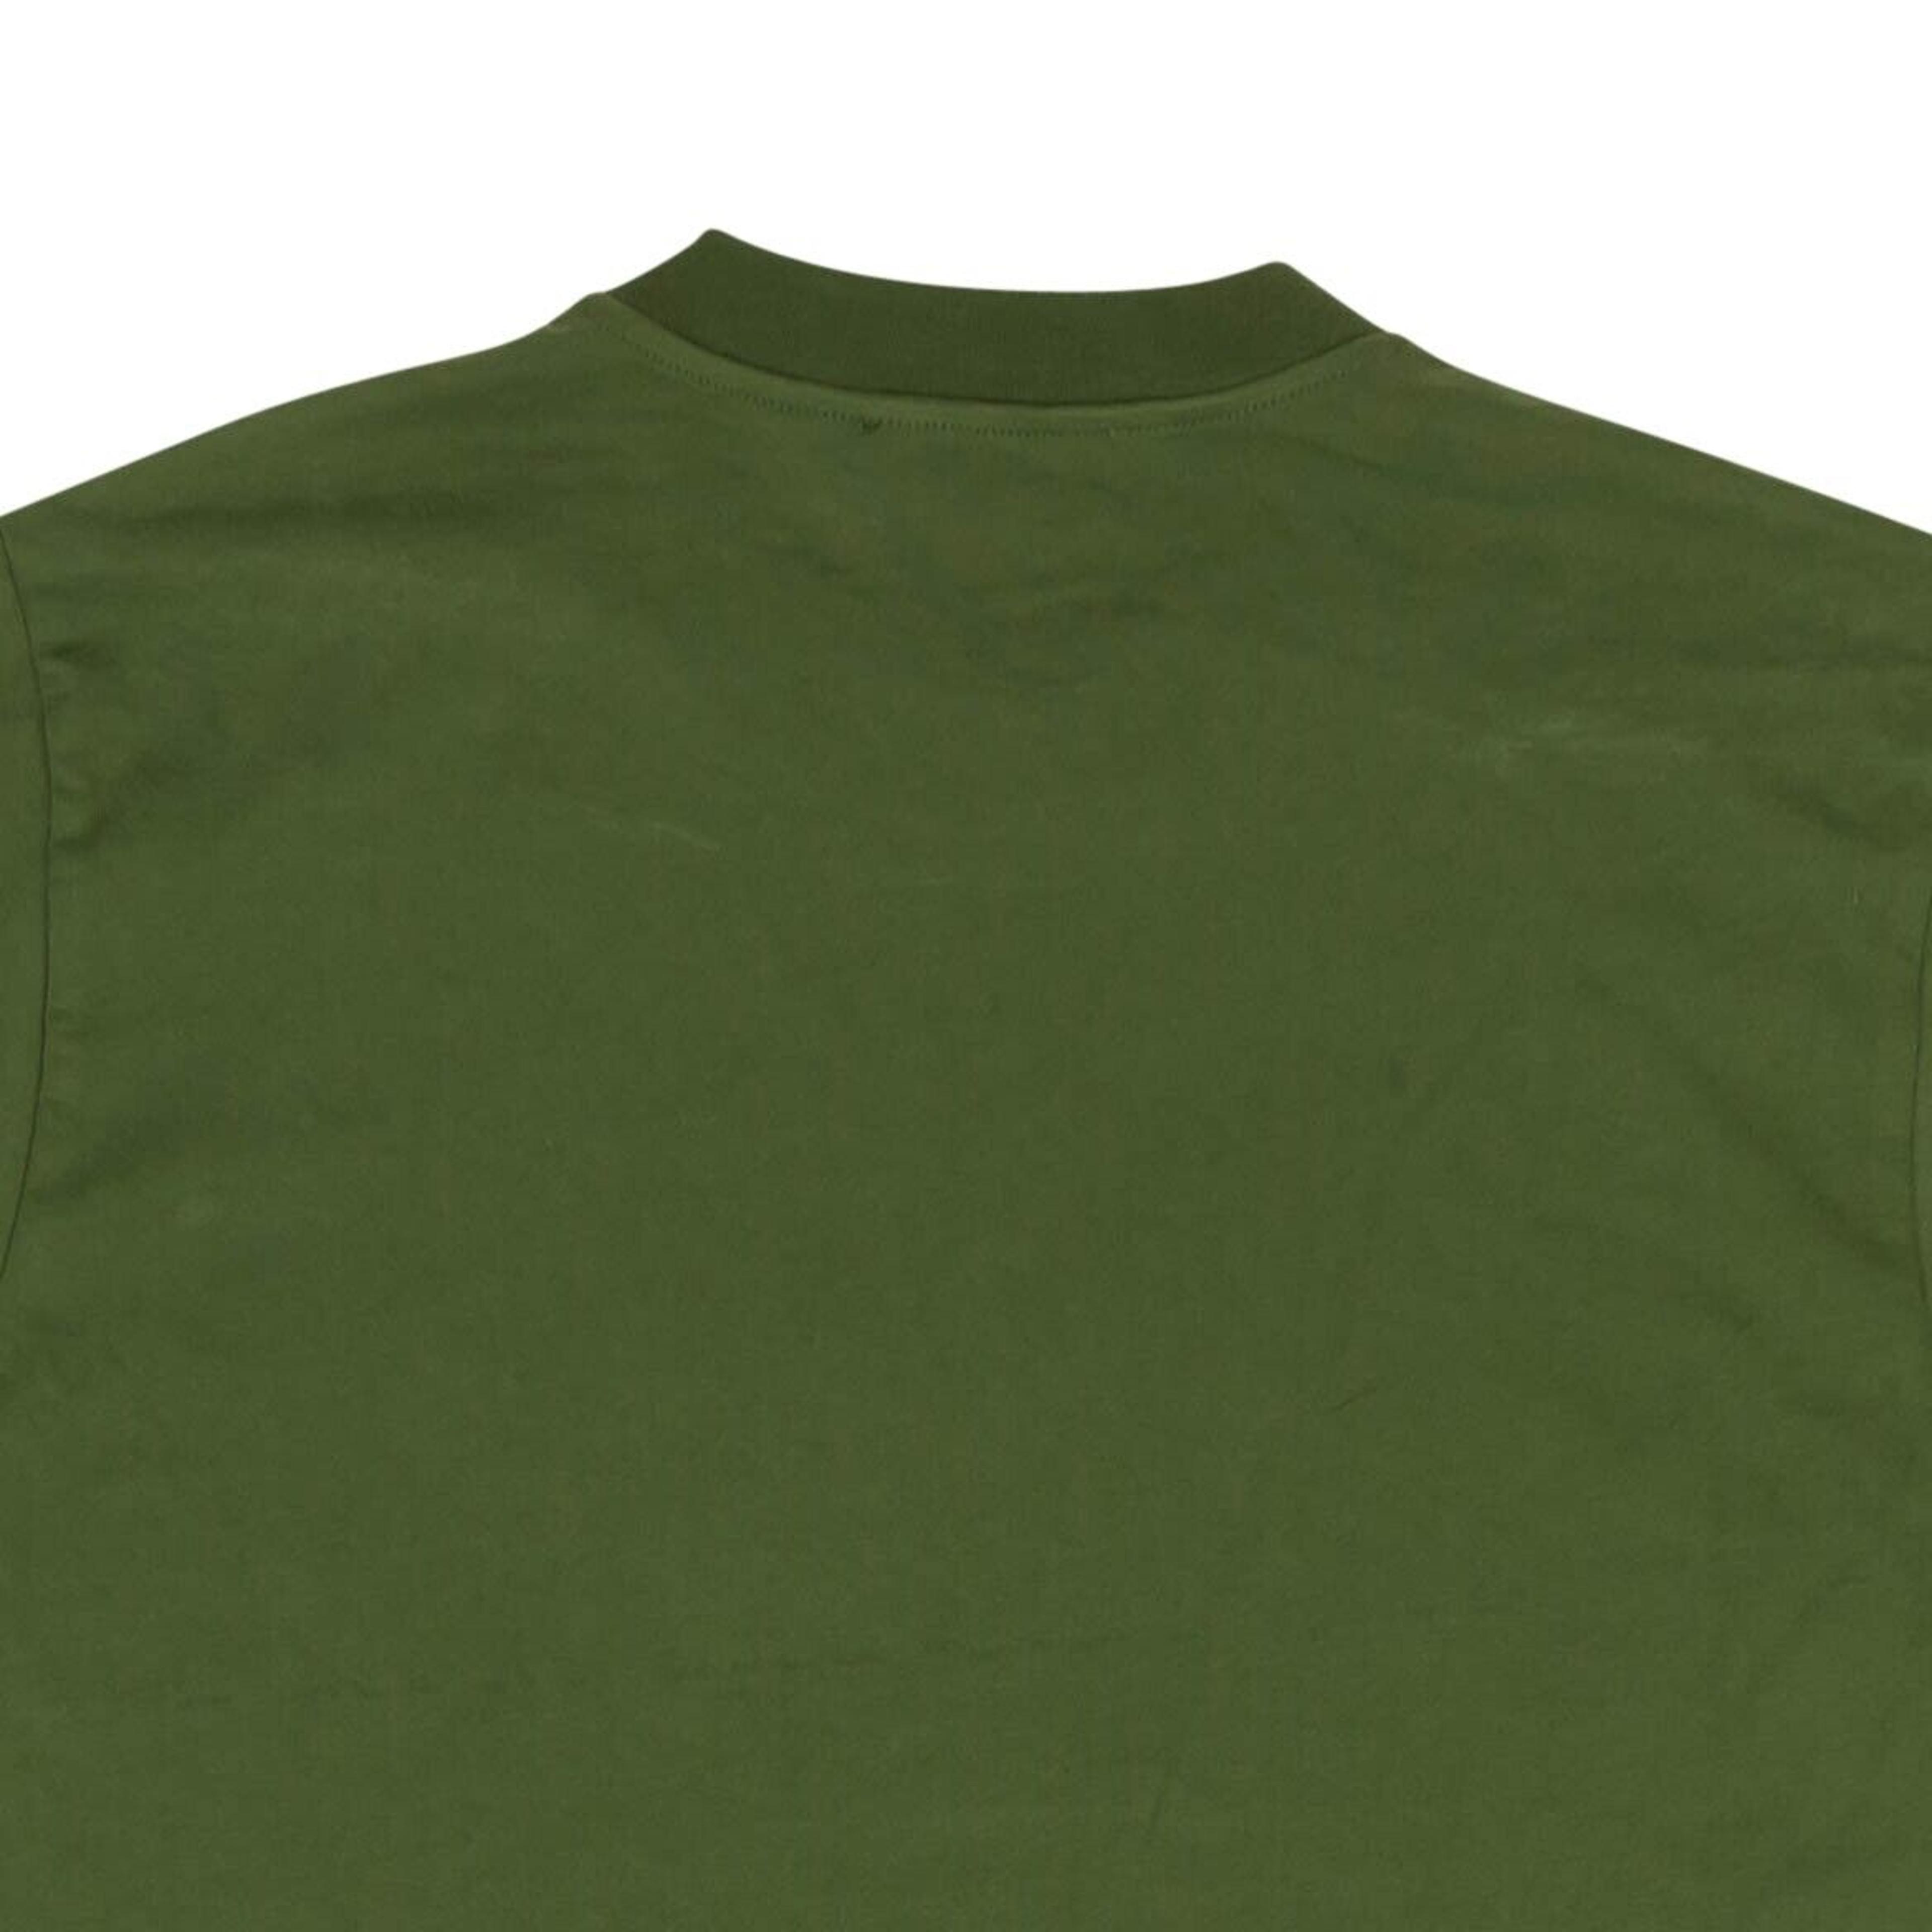 Alternate View 3 of Men'S T-Shirts - Green/White